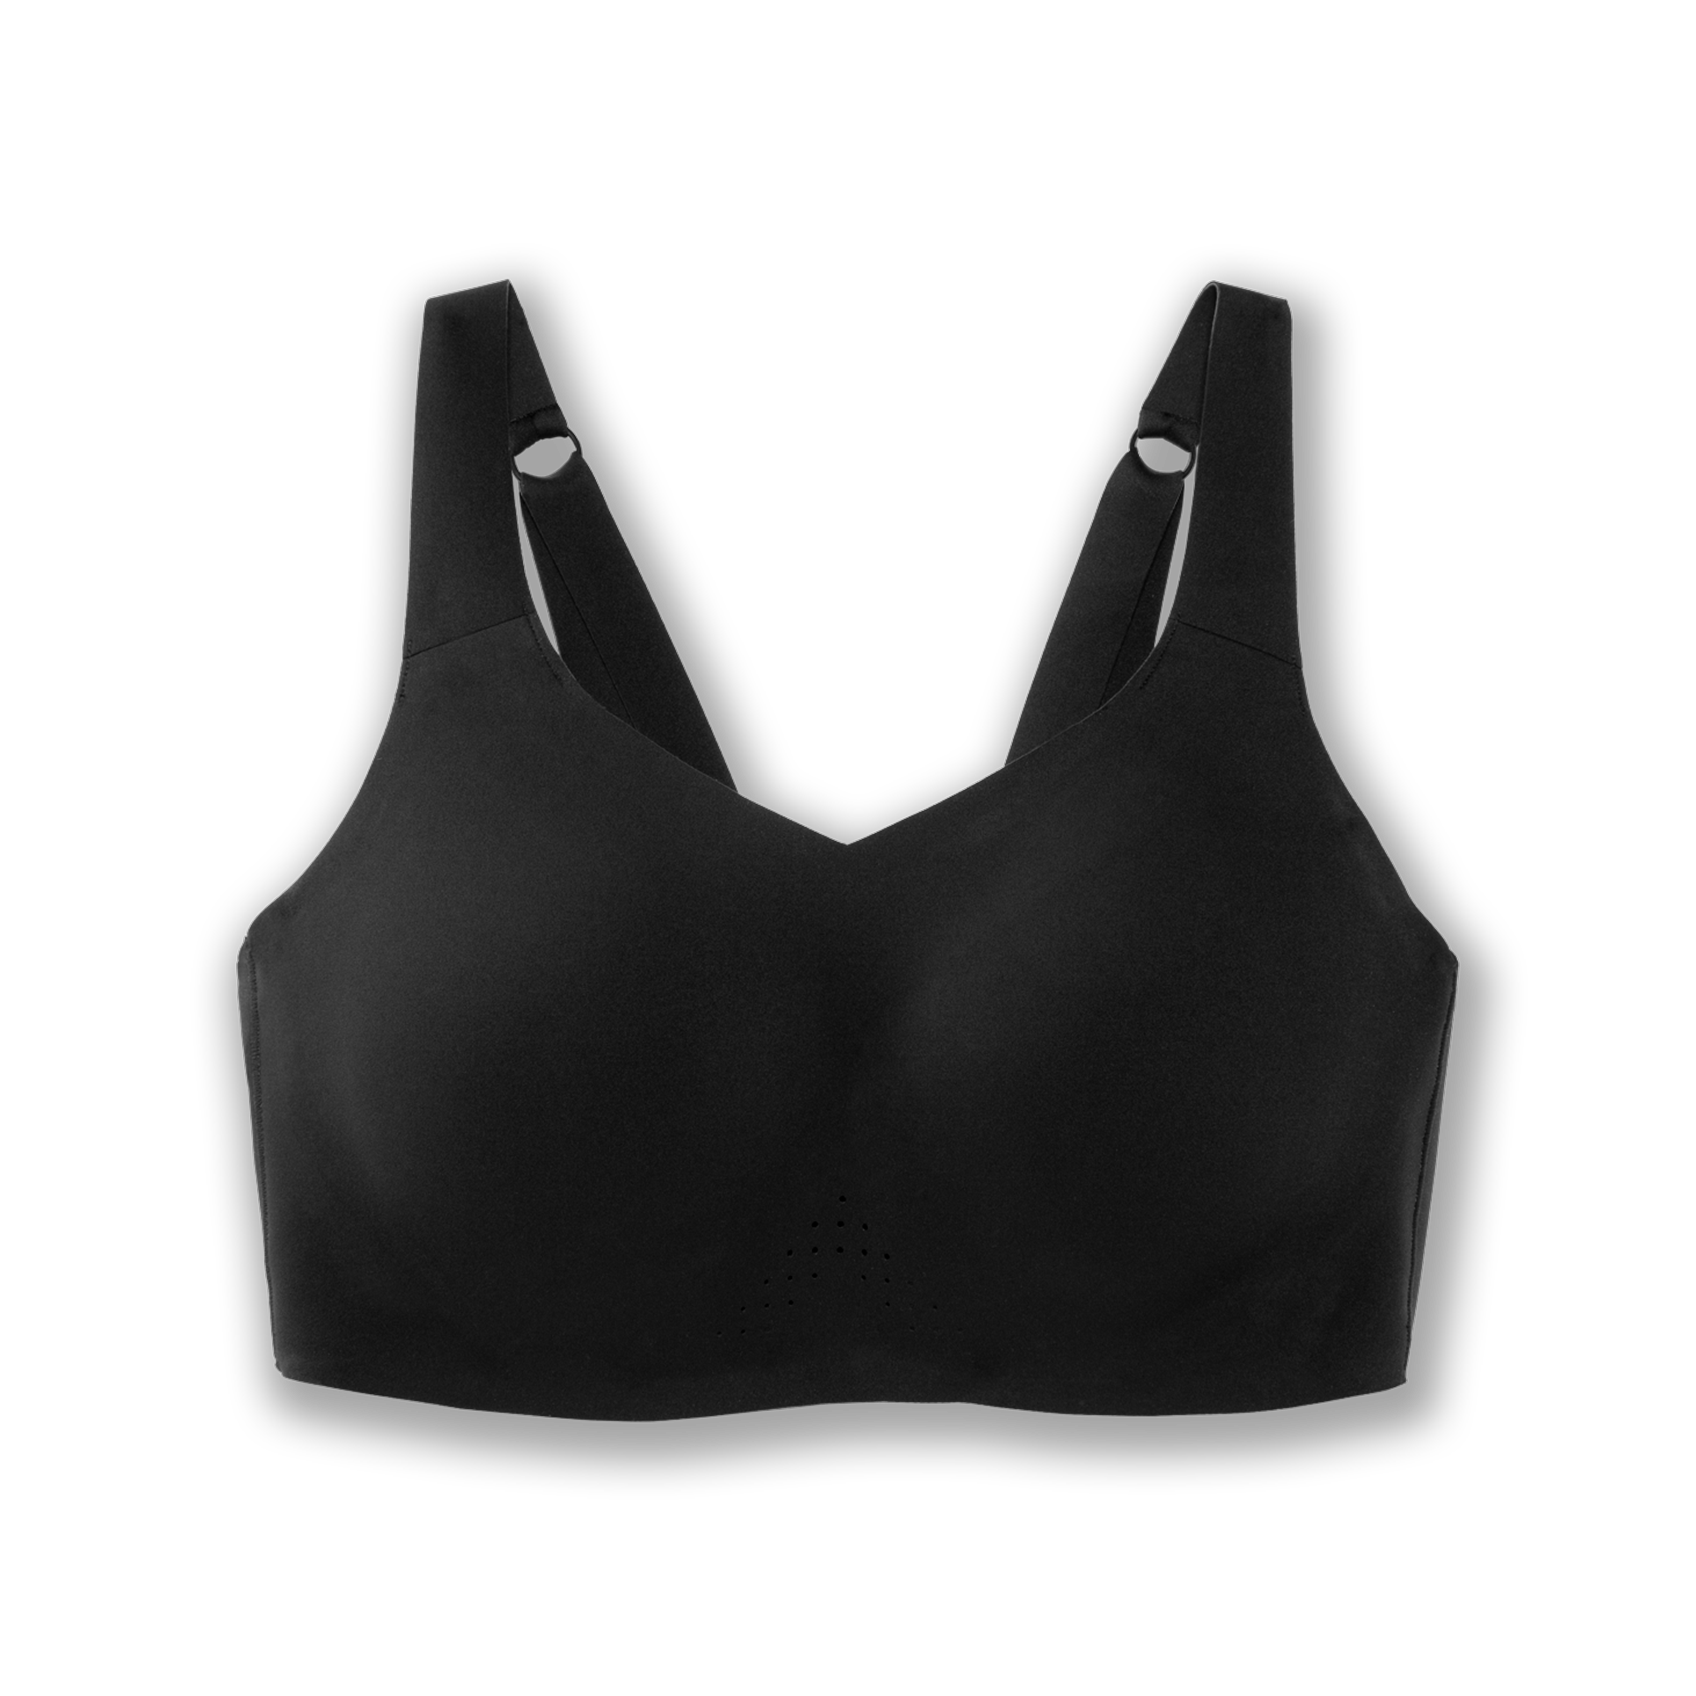 Knix: This bra's bringing sexy